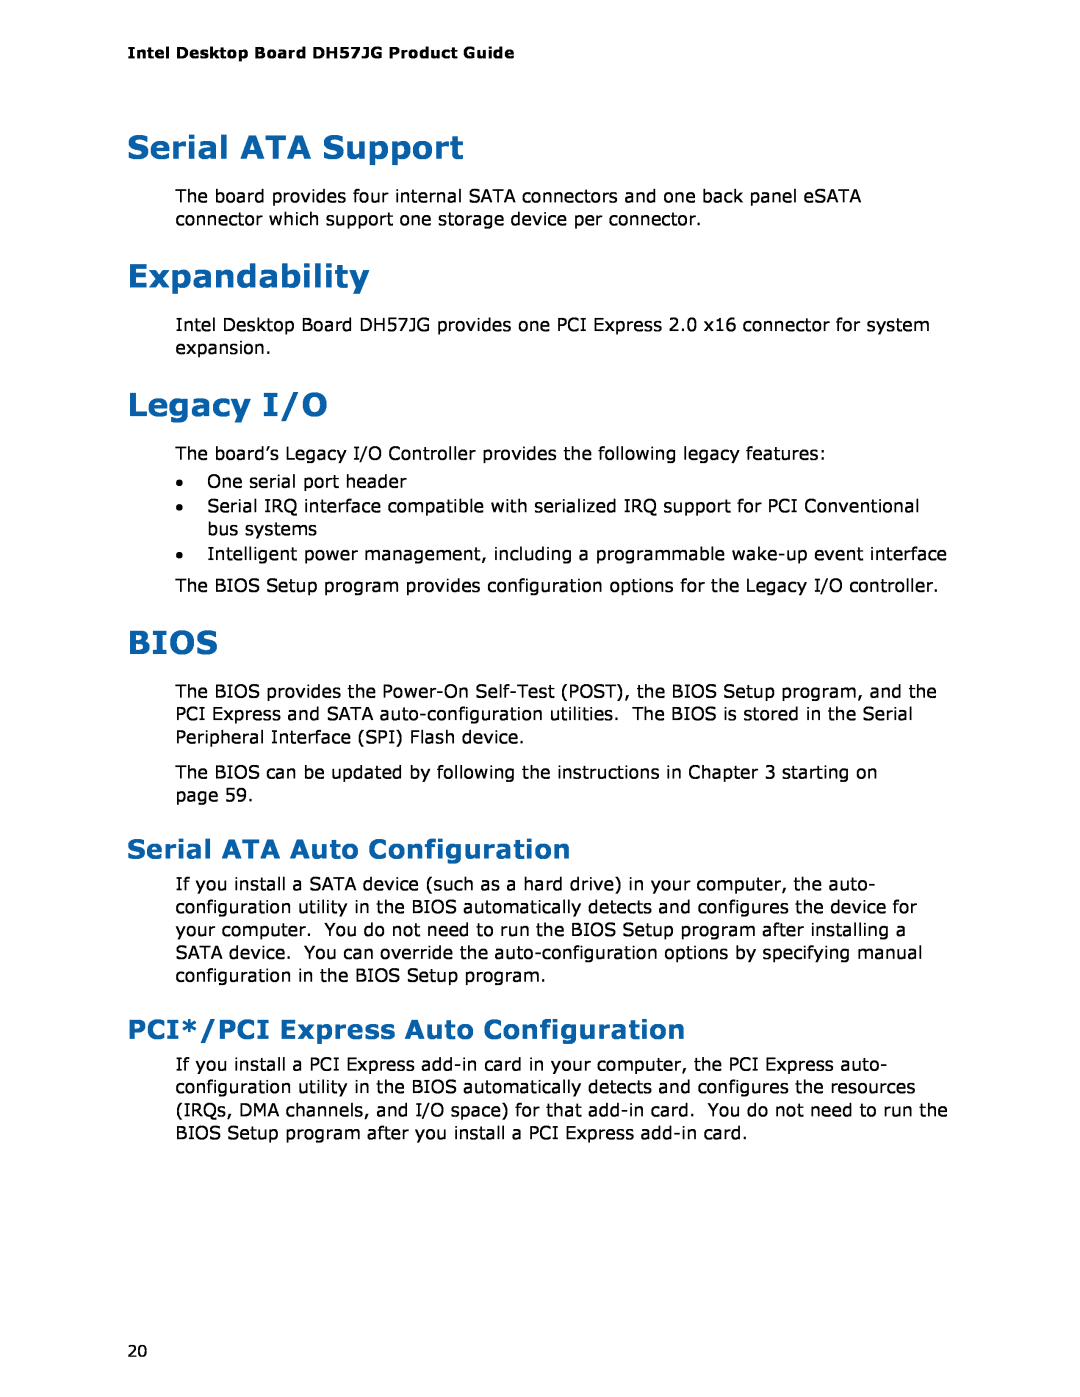 Intel BLKDH57JG manual Serial ATA Support, Expandability, Legacy I/O, Bios, Serial ATA Auto Configuration 